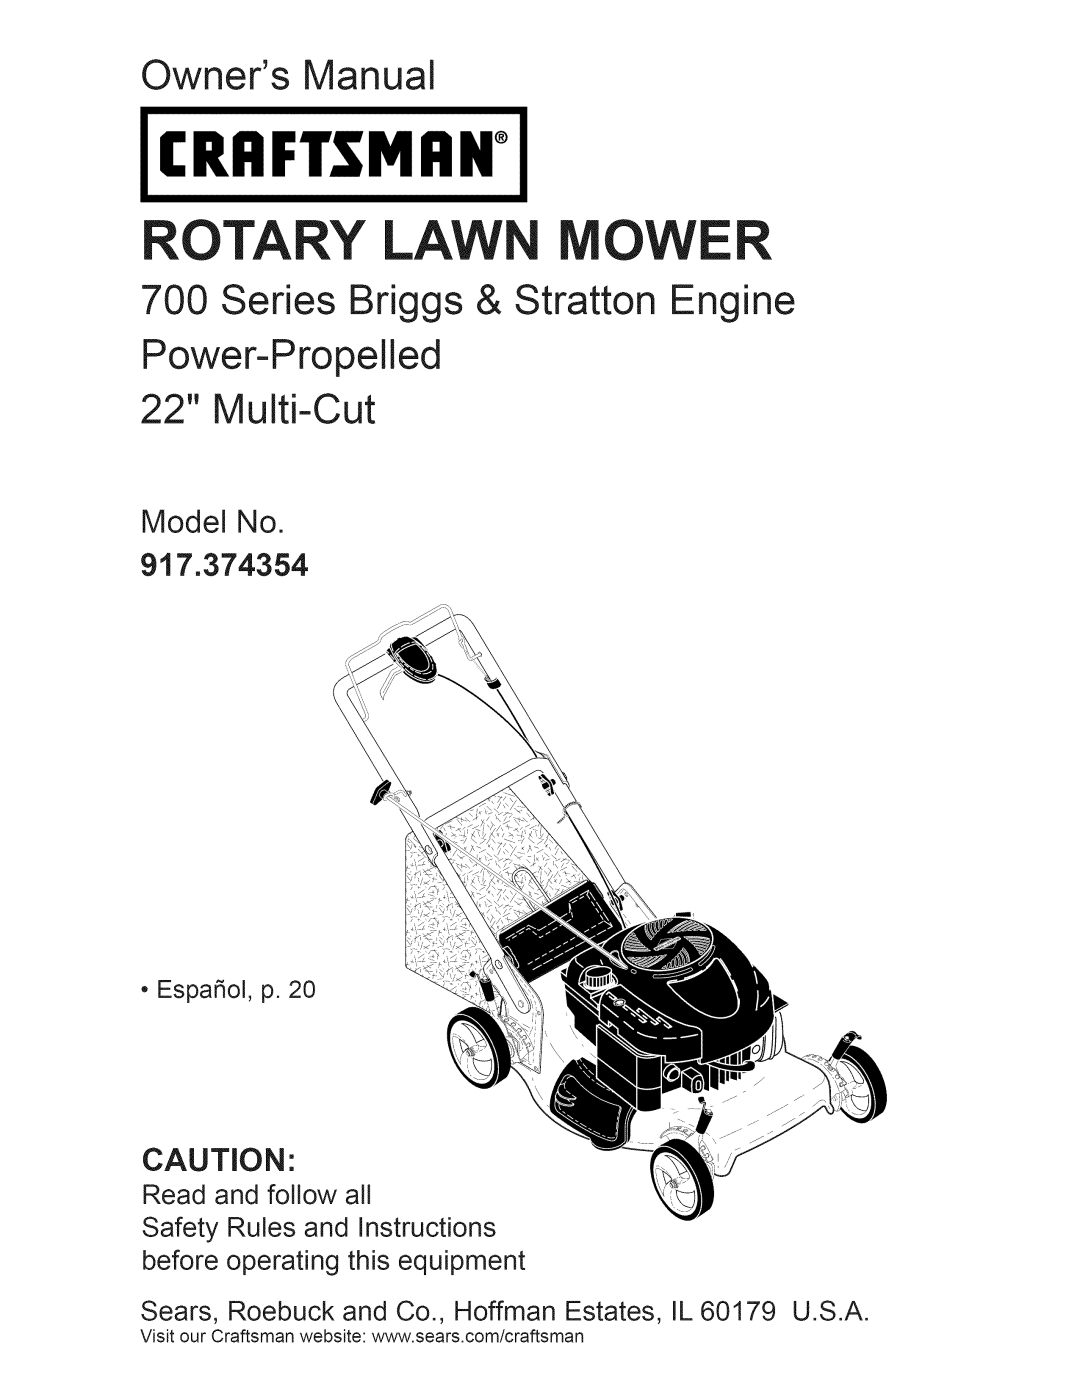 Craftsman owner manual Model No 917.374354, Craftsman, Rotary Lawn Mower, Owners Manual, Power-Propelled 22 Multi-Cut 